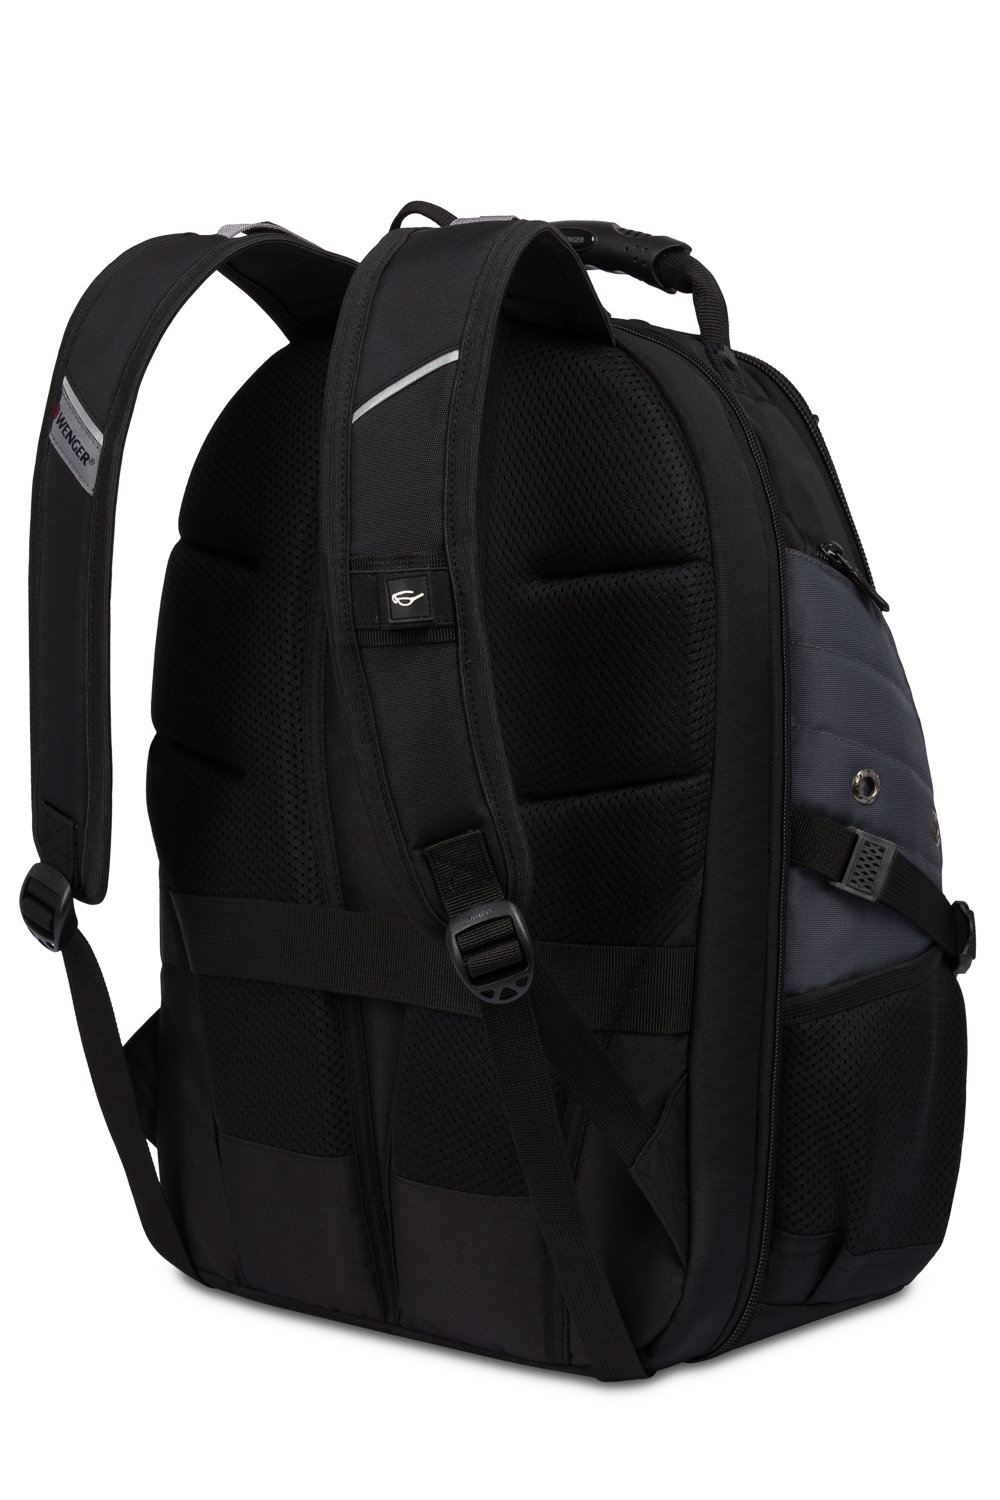 Legend Gear side bag LC1 black, right - SW-MOTECH